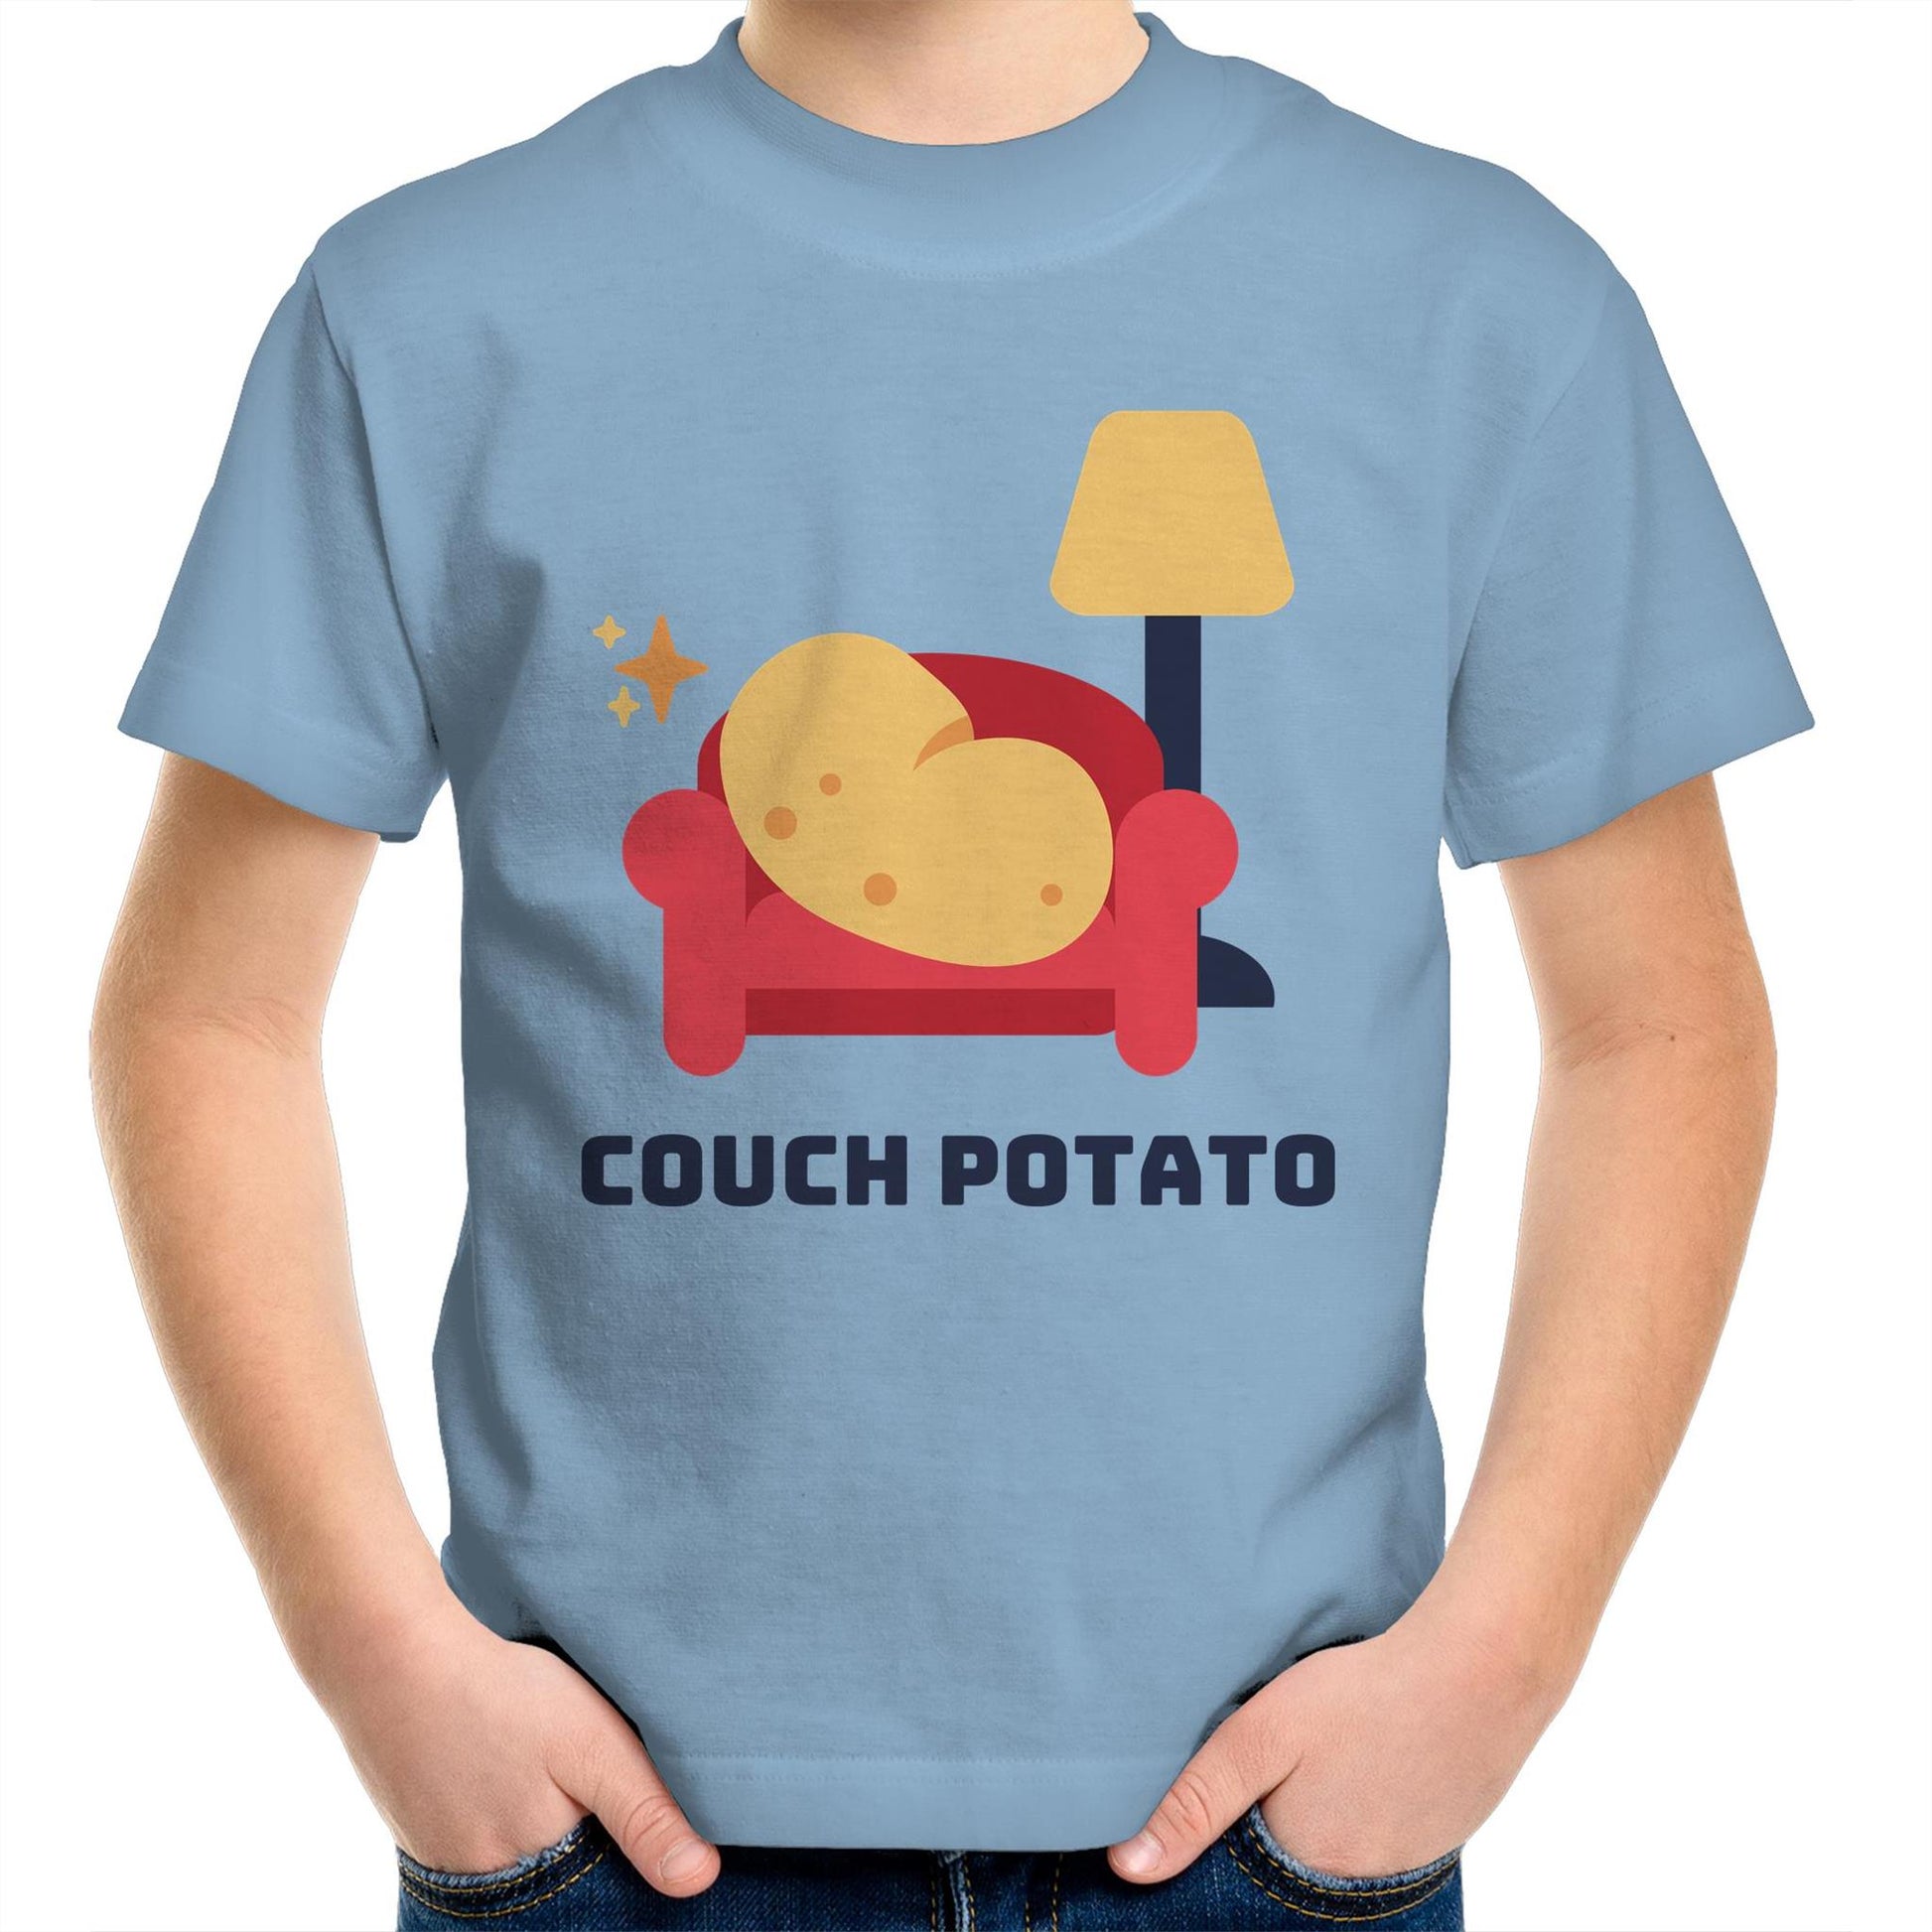 Couch Potato - Kids Youth Crew T-Shirt Carolina Blue Kids Youth T-shirt Funny